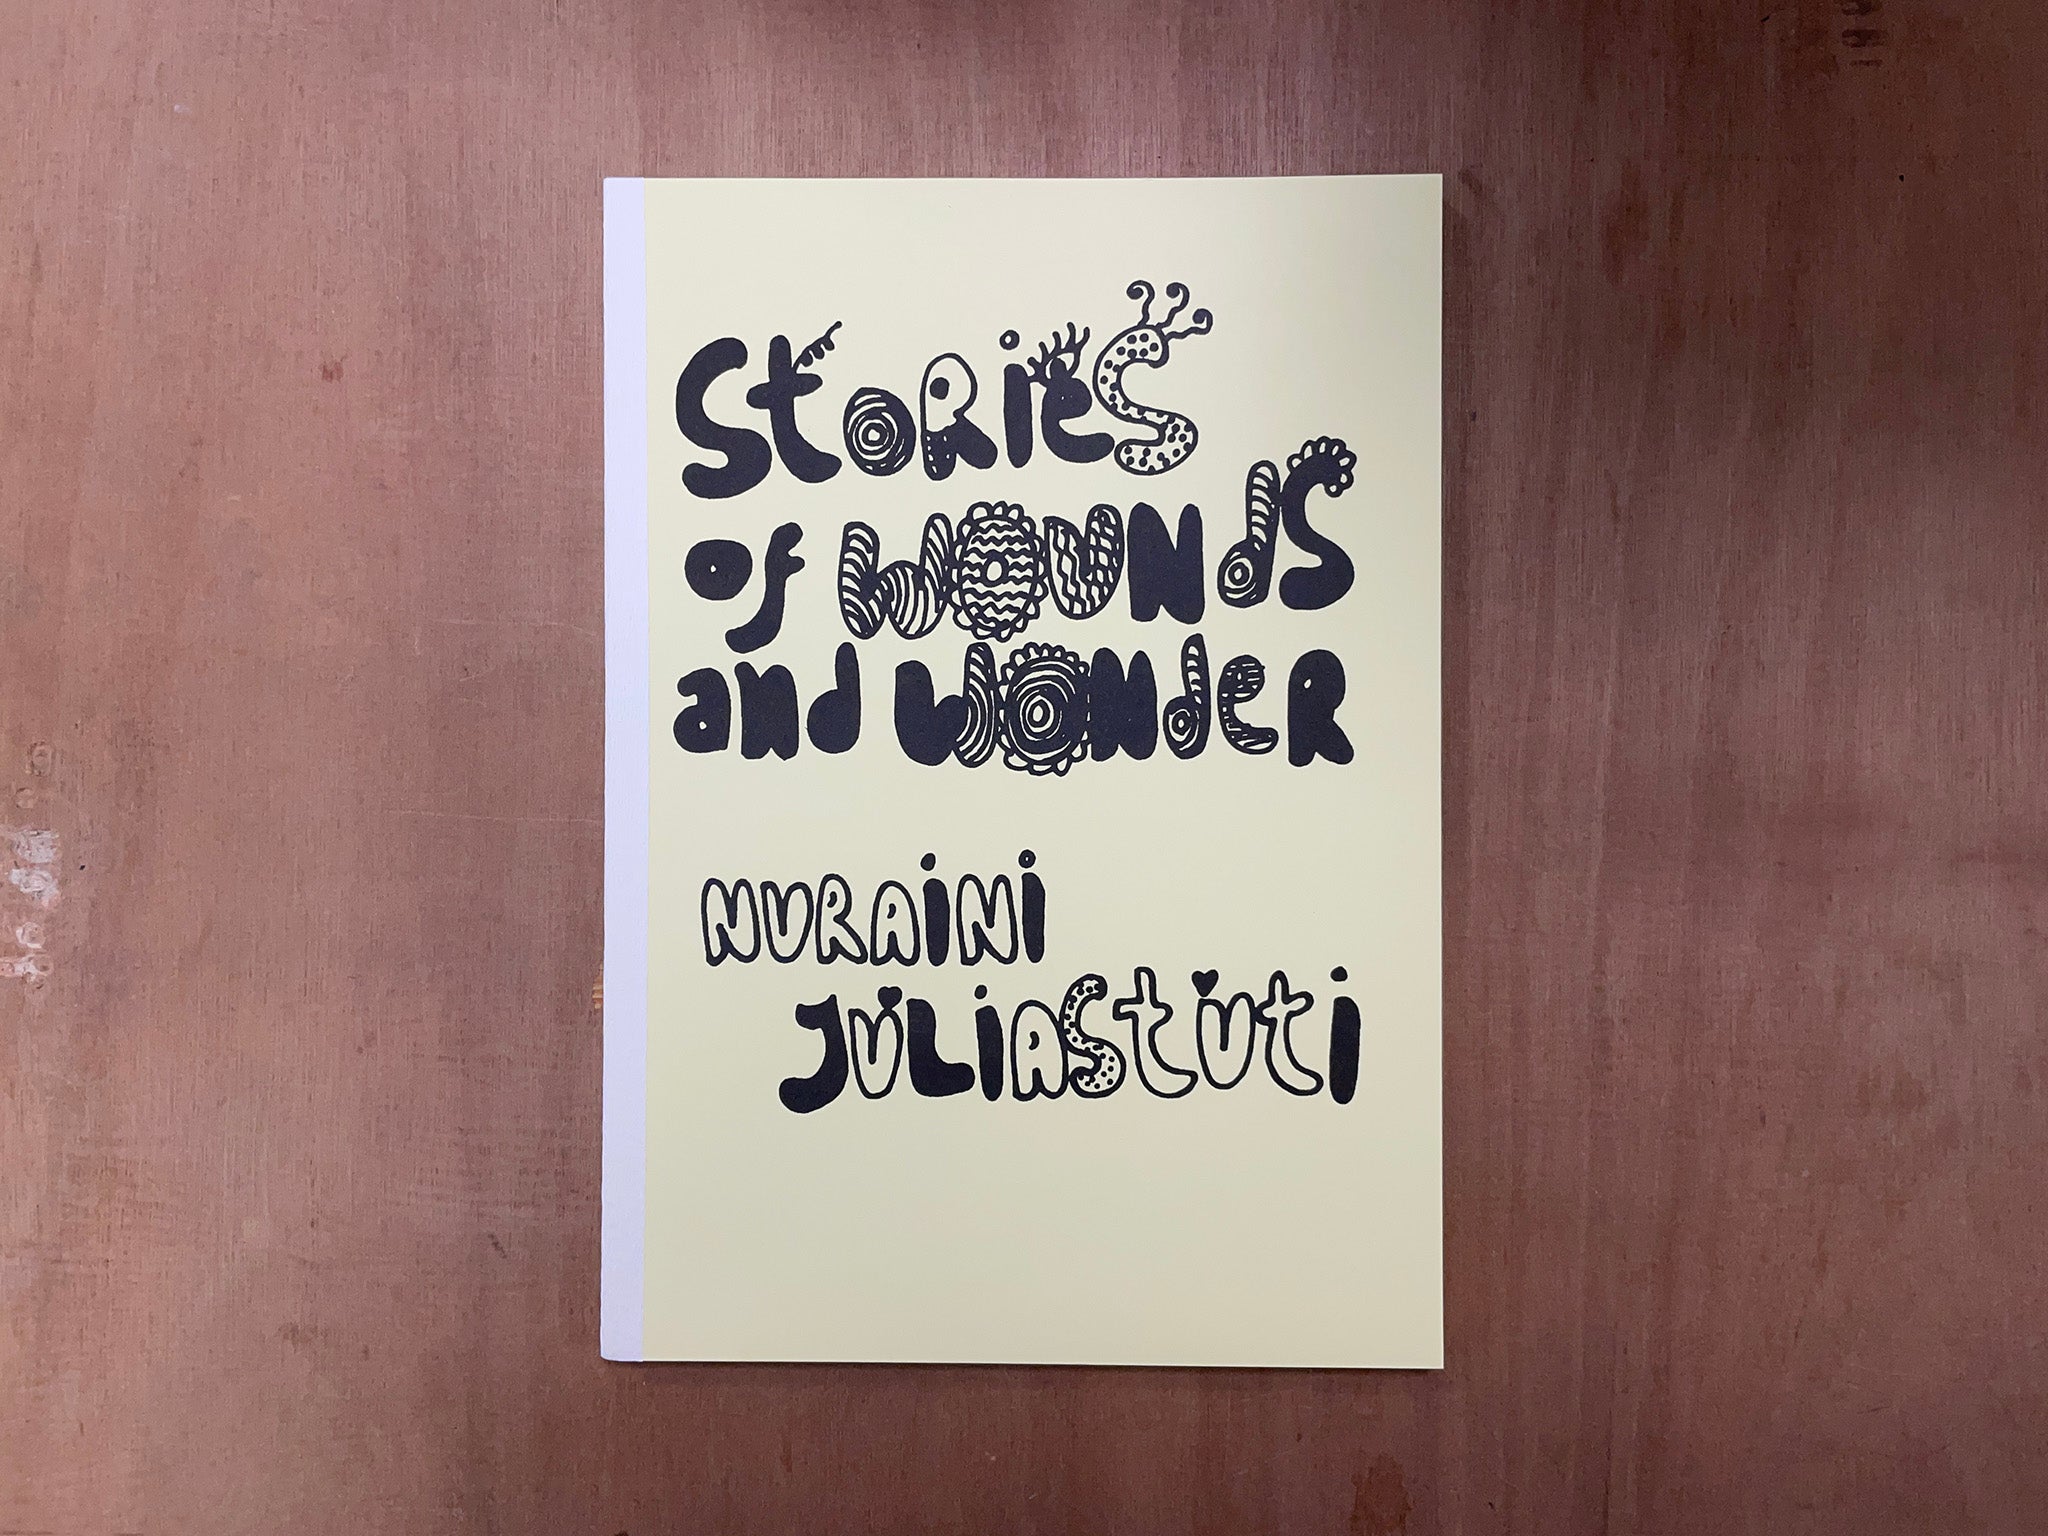 STORIES OF WOUNDS AND WONDER by Nuraini Juliastuti